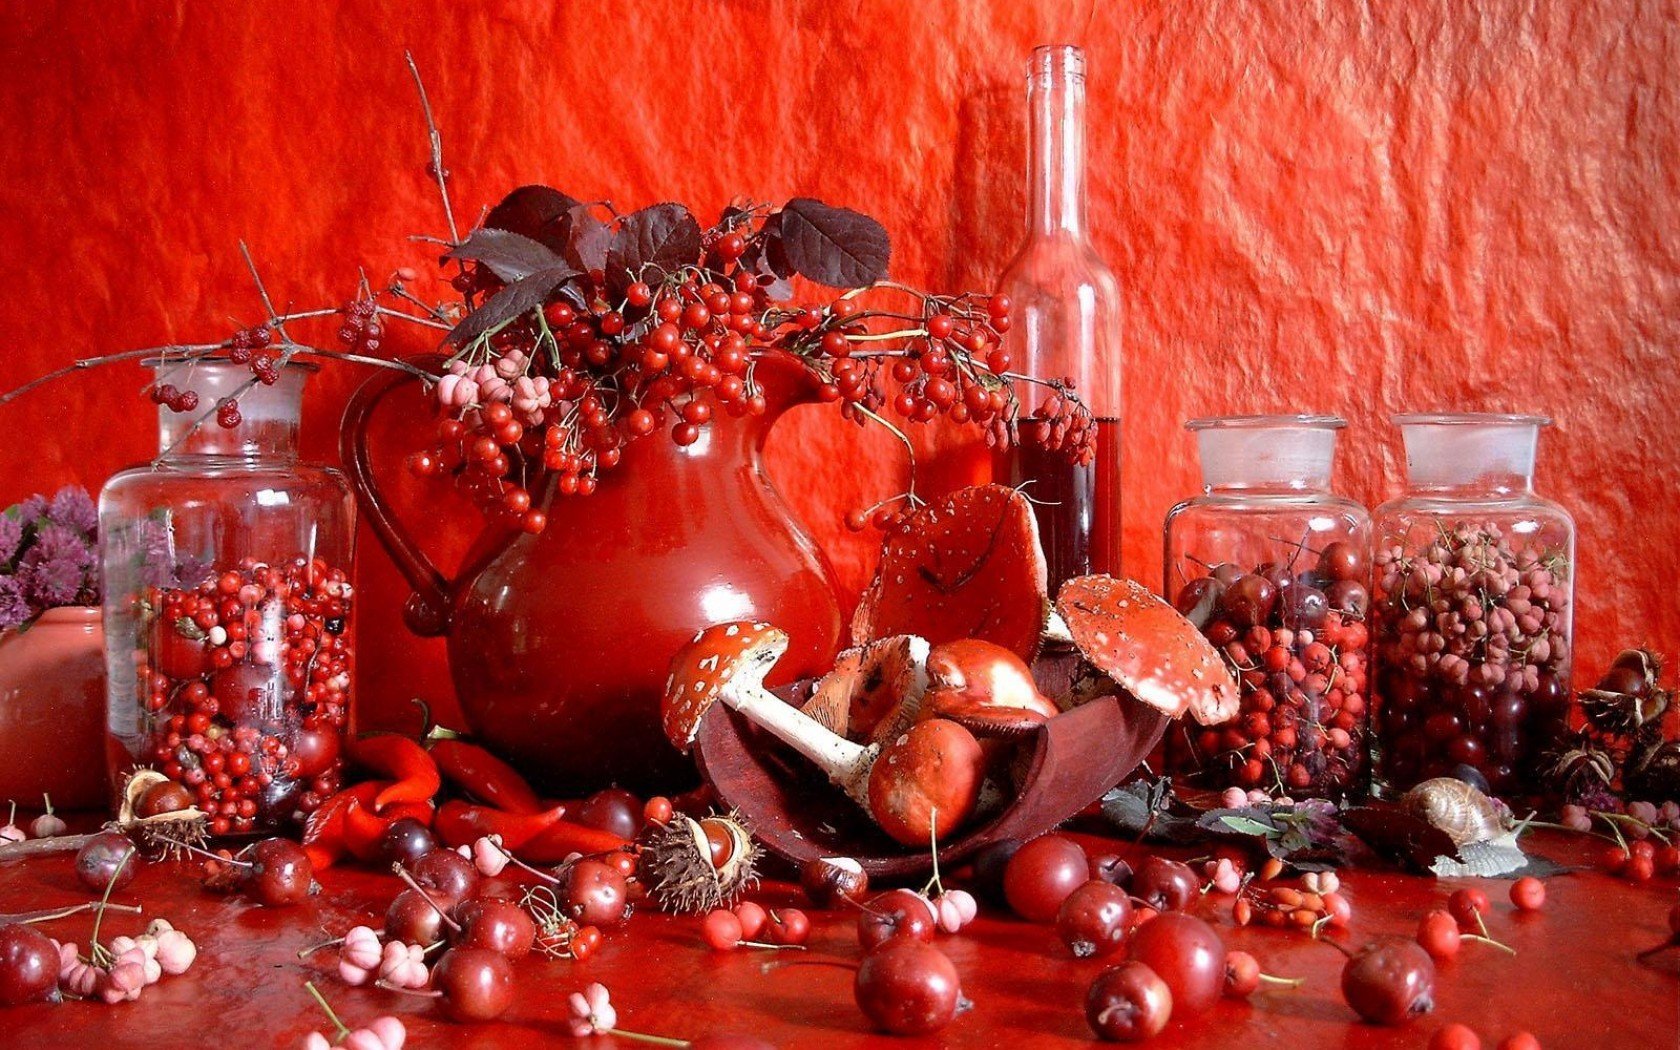 натюрморт красный каштан грибы ягоды вино